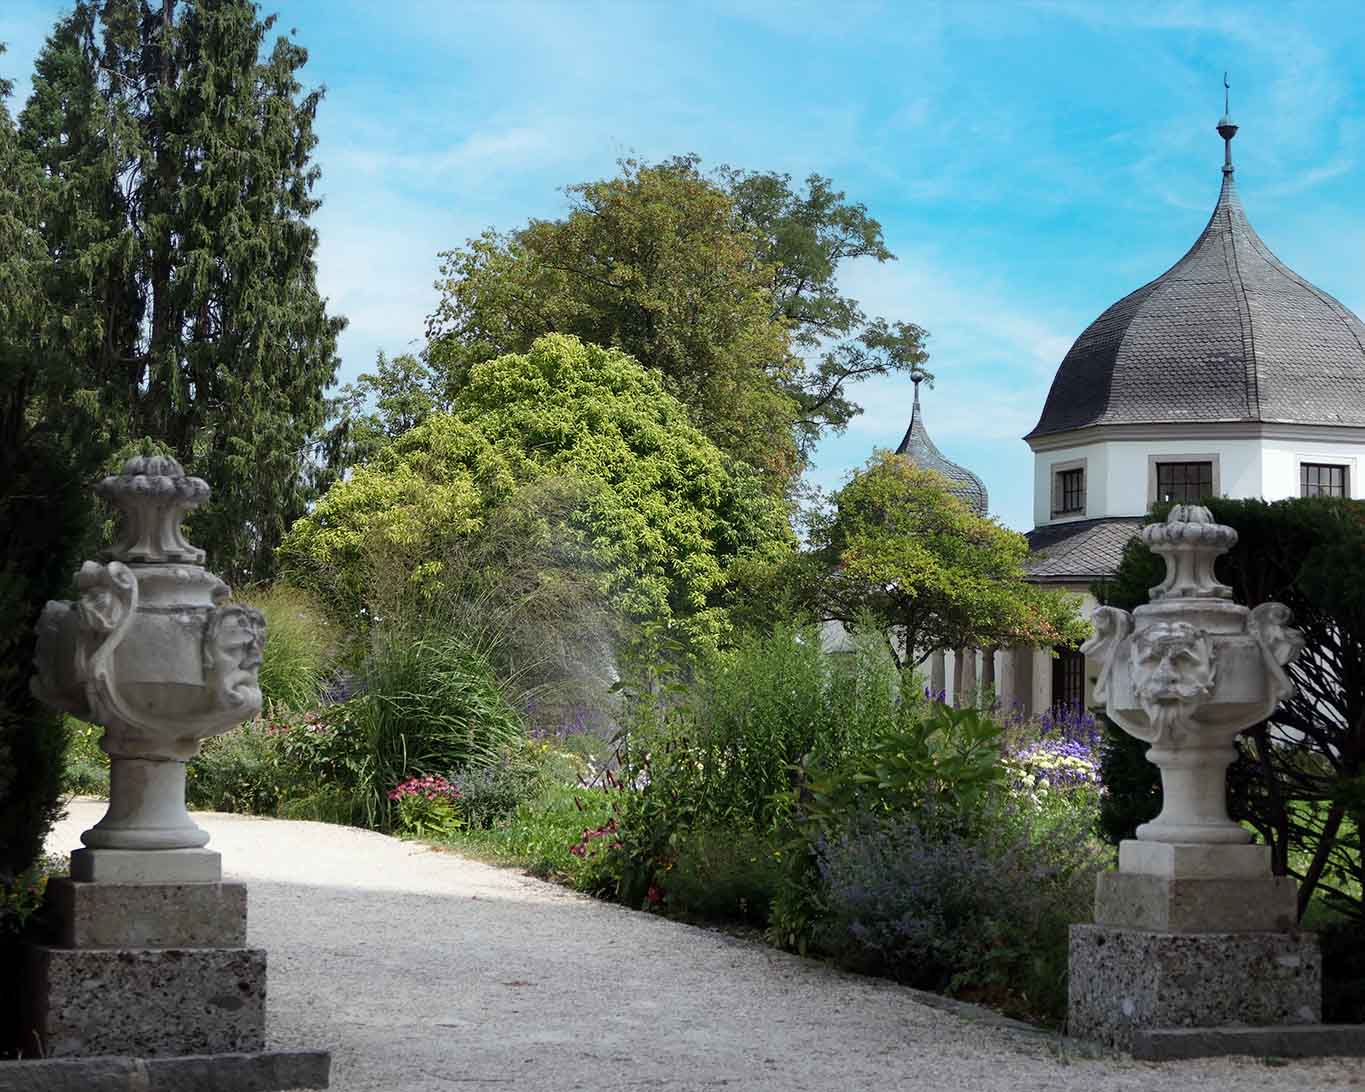 Blick in den Sternwartengarten mit dem Renaissance-Gartenpavillon